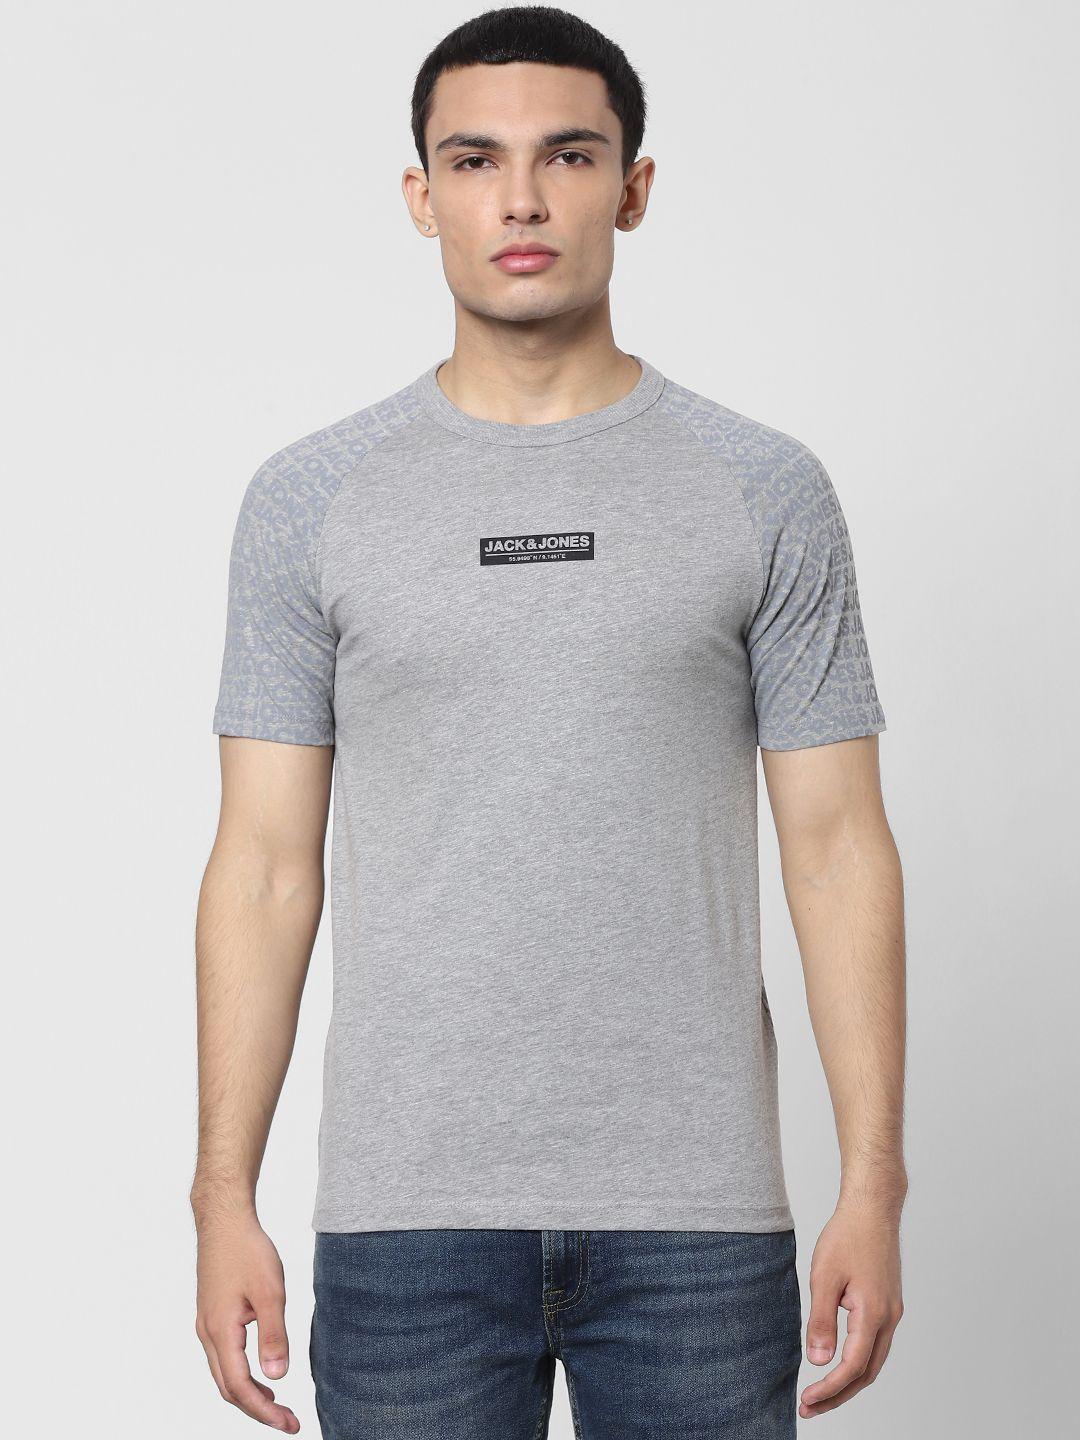 jack & jones men grey melange solid round neck t-shirt with printed detailing